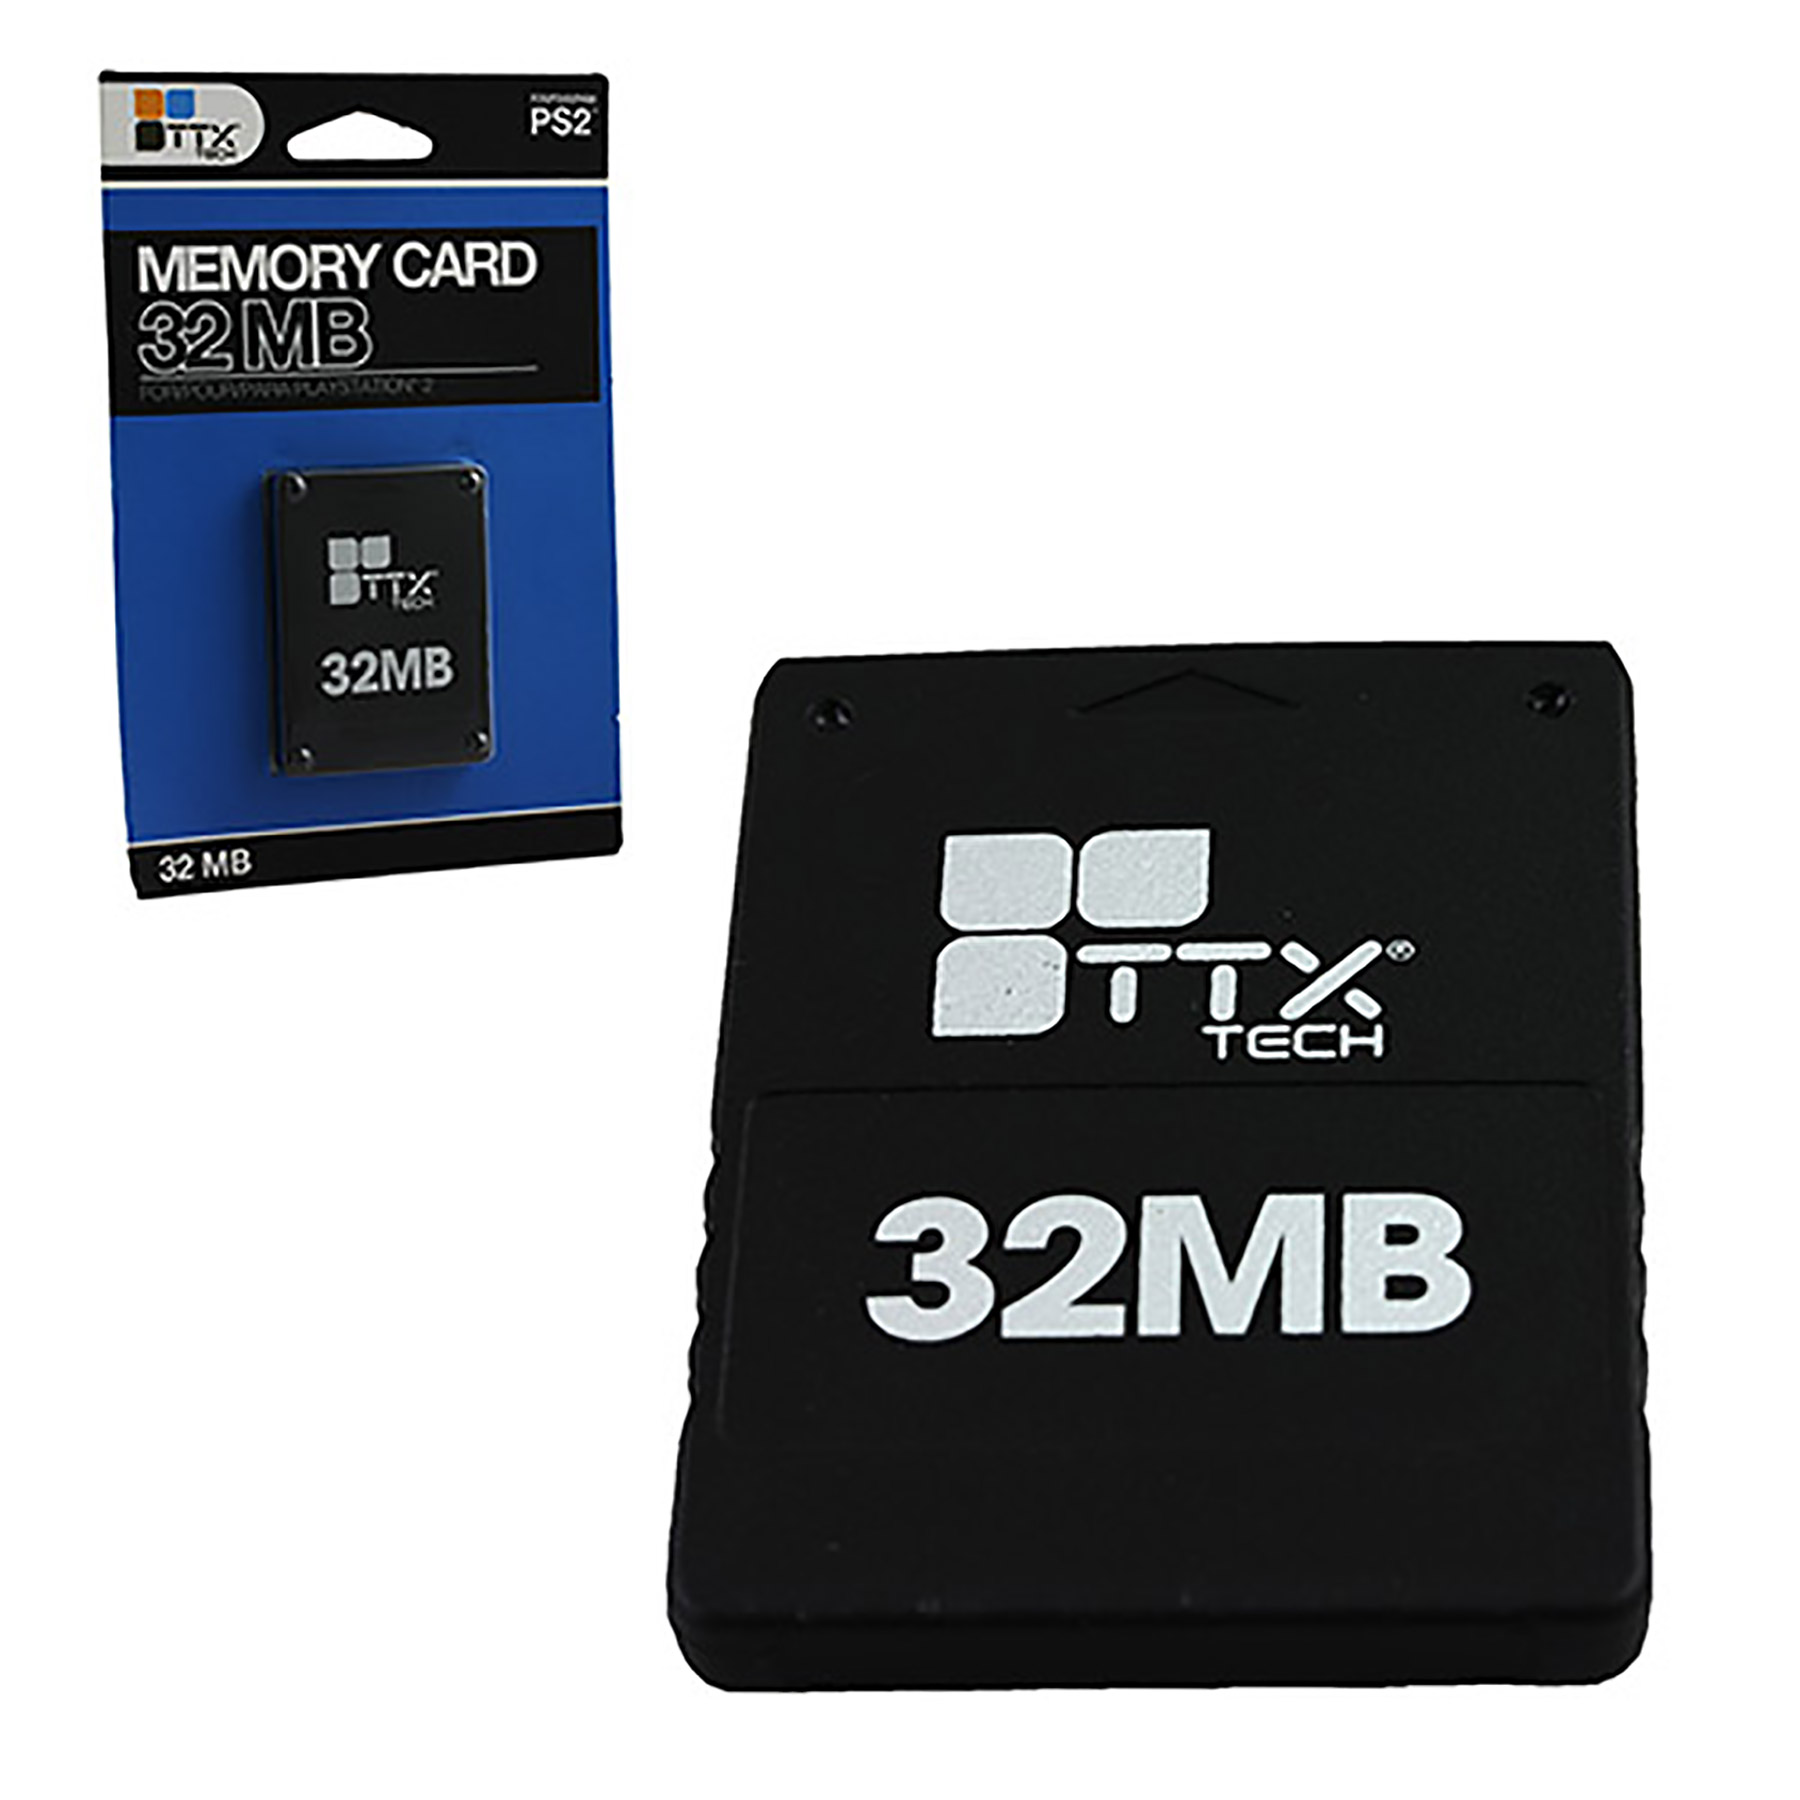 2 мемори. Ps2 Memory Card 8mb. Memory Card 32 MB EXEQ ps2. Карта памяти 32mb для ps2. Ps2 Memory Card steakers.